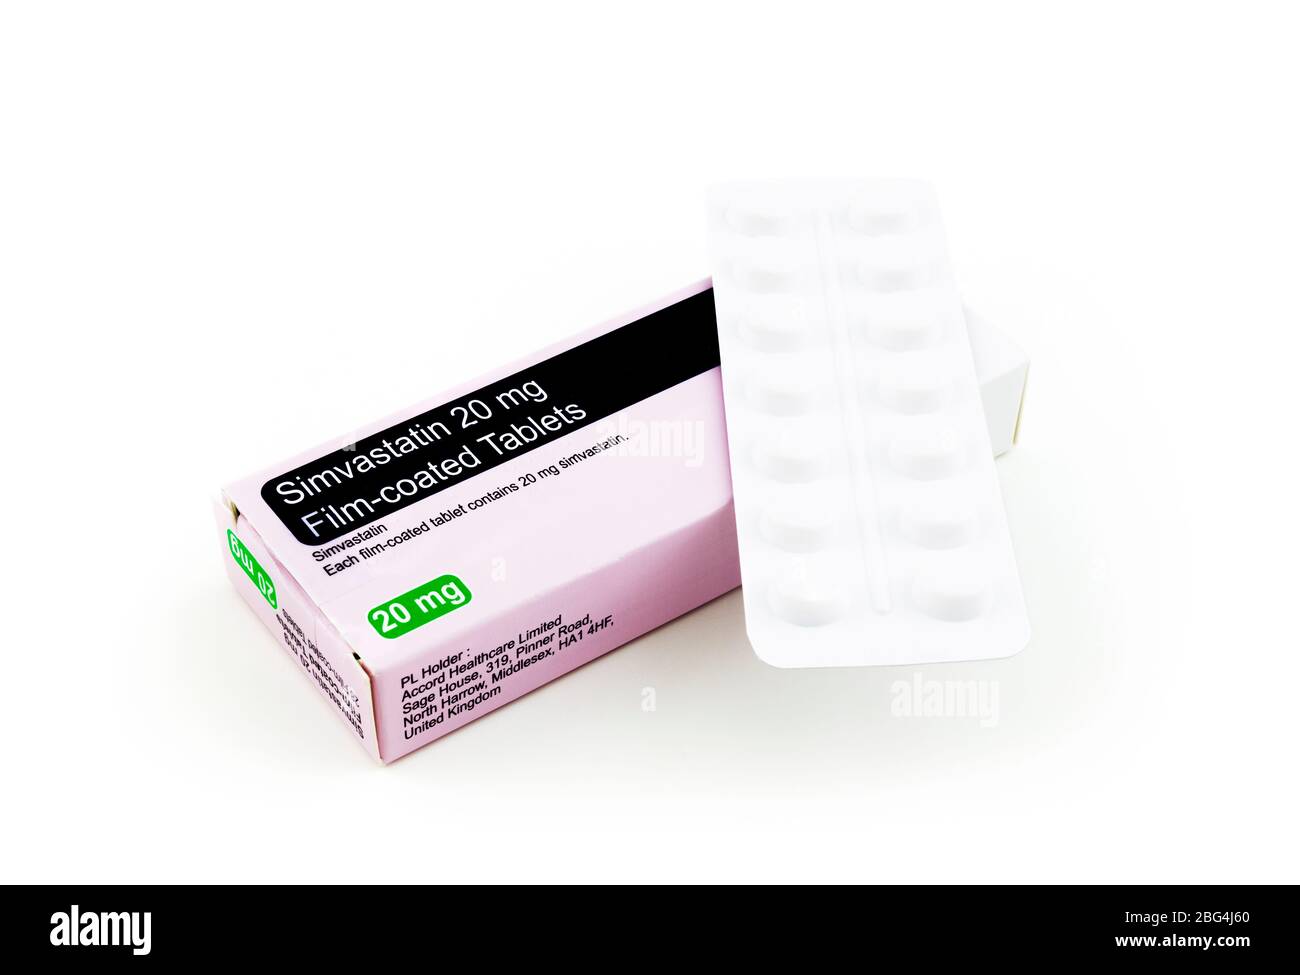 Statintabletten Simvastatin Tabletten Simvastatin 20mg Tabletten zur  Cholesterinreduktion Stockfotografie - Alamy